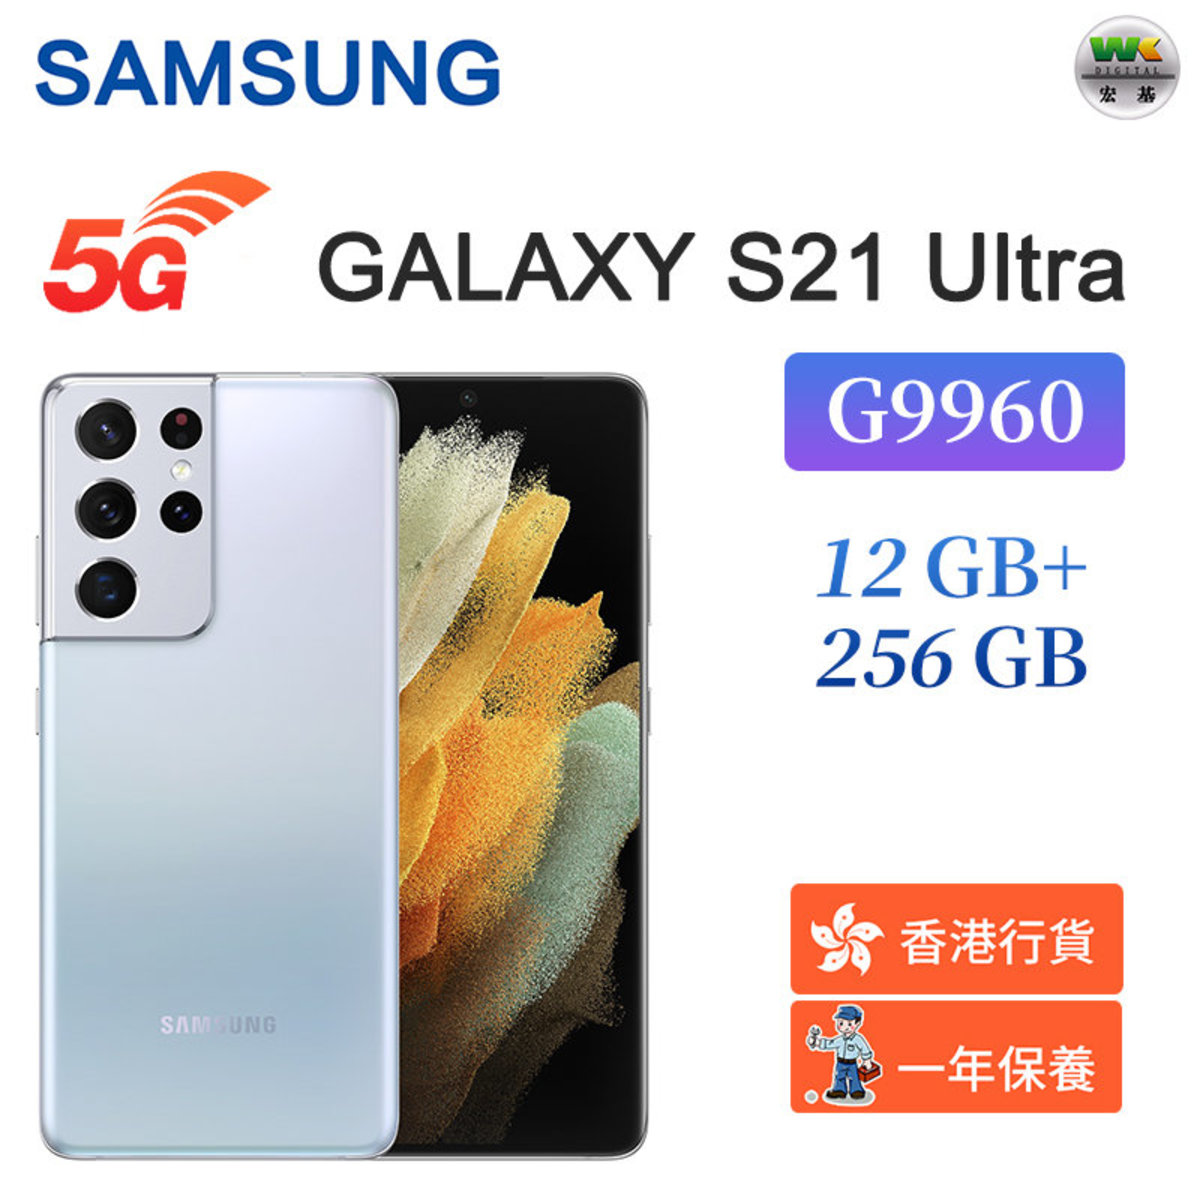 Samsung | Galaxy S21 Ultra 5G G9980 (12GB + 256GB) - Phantom